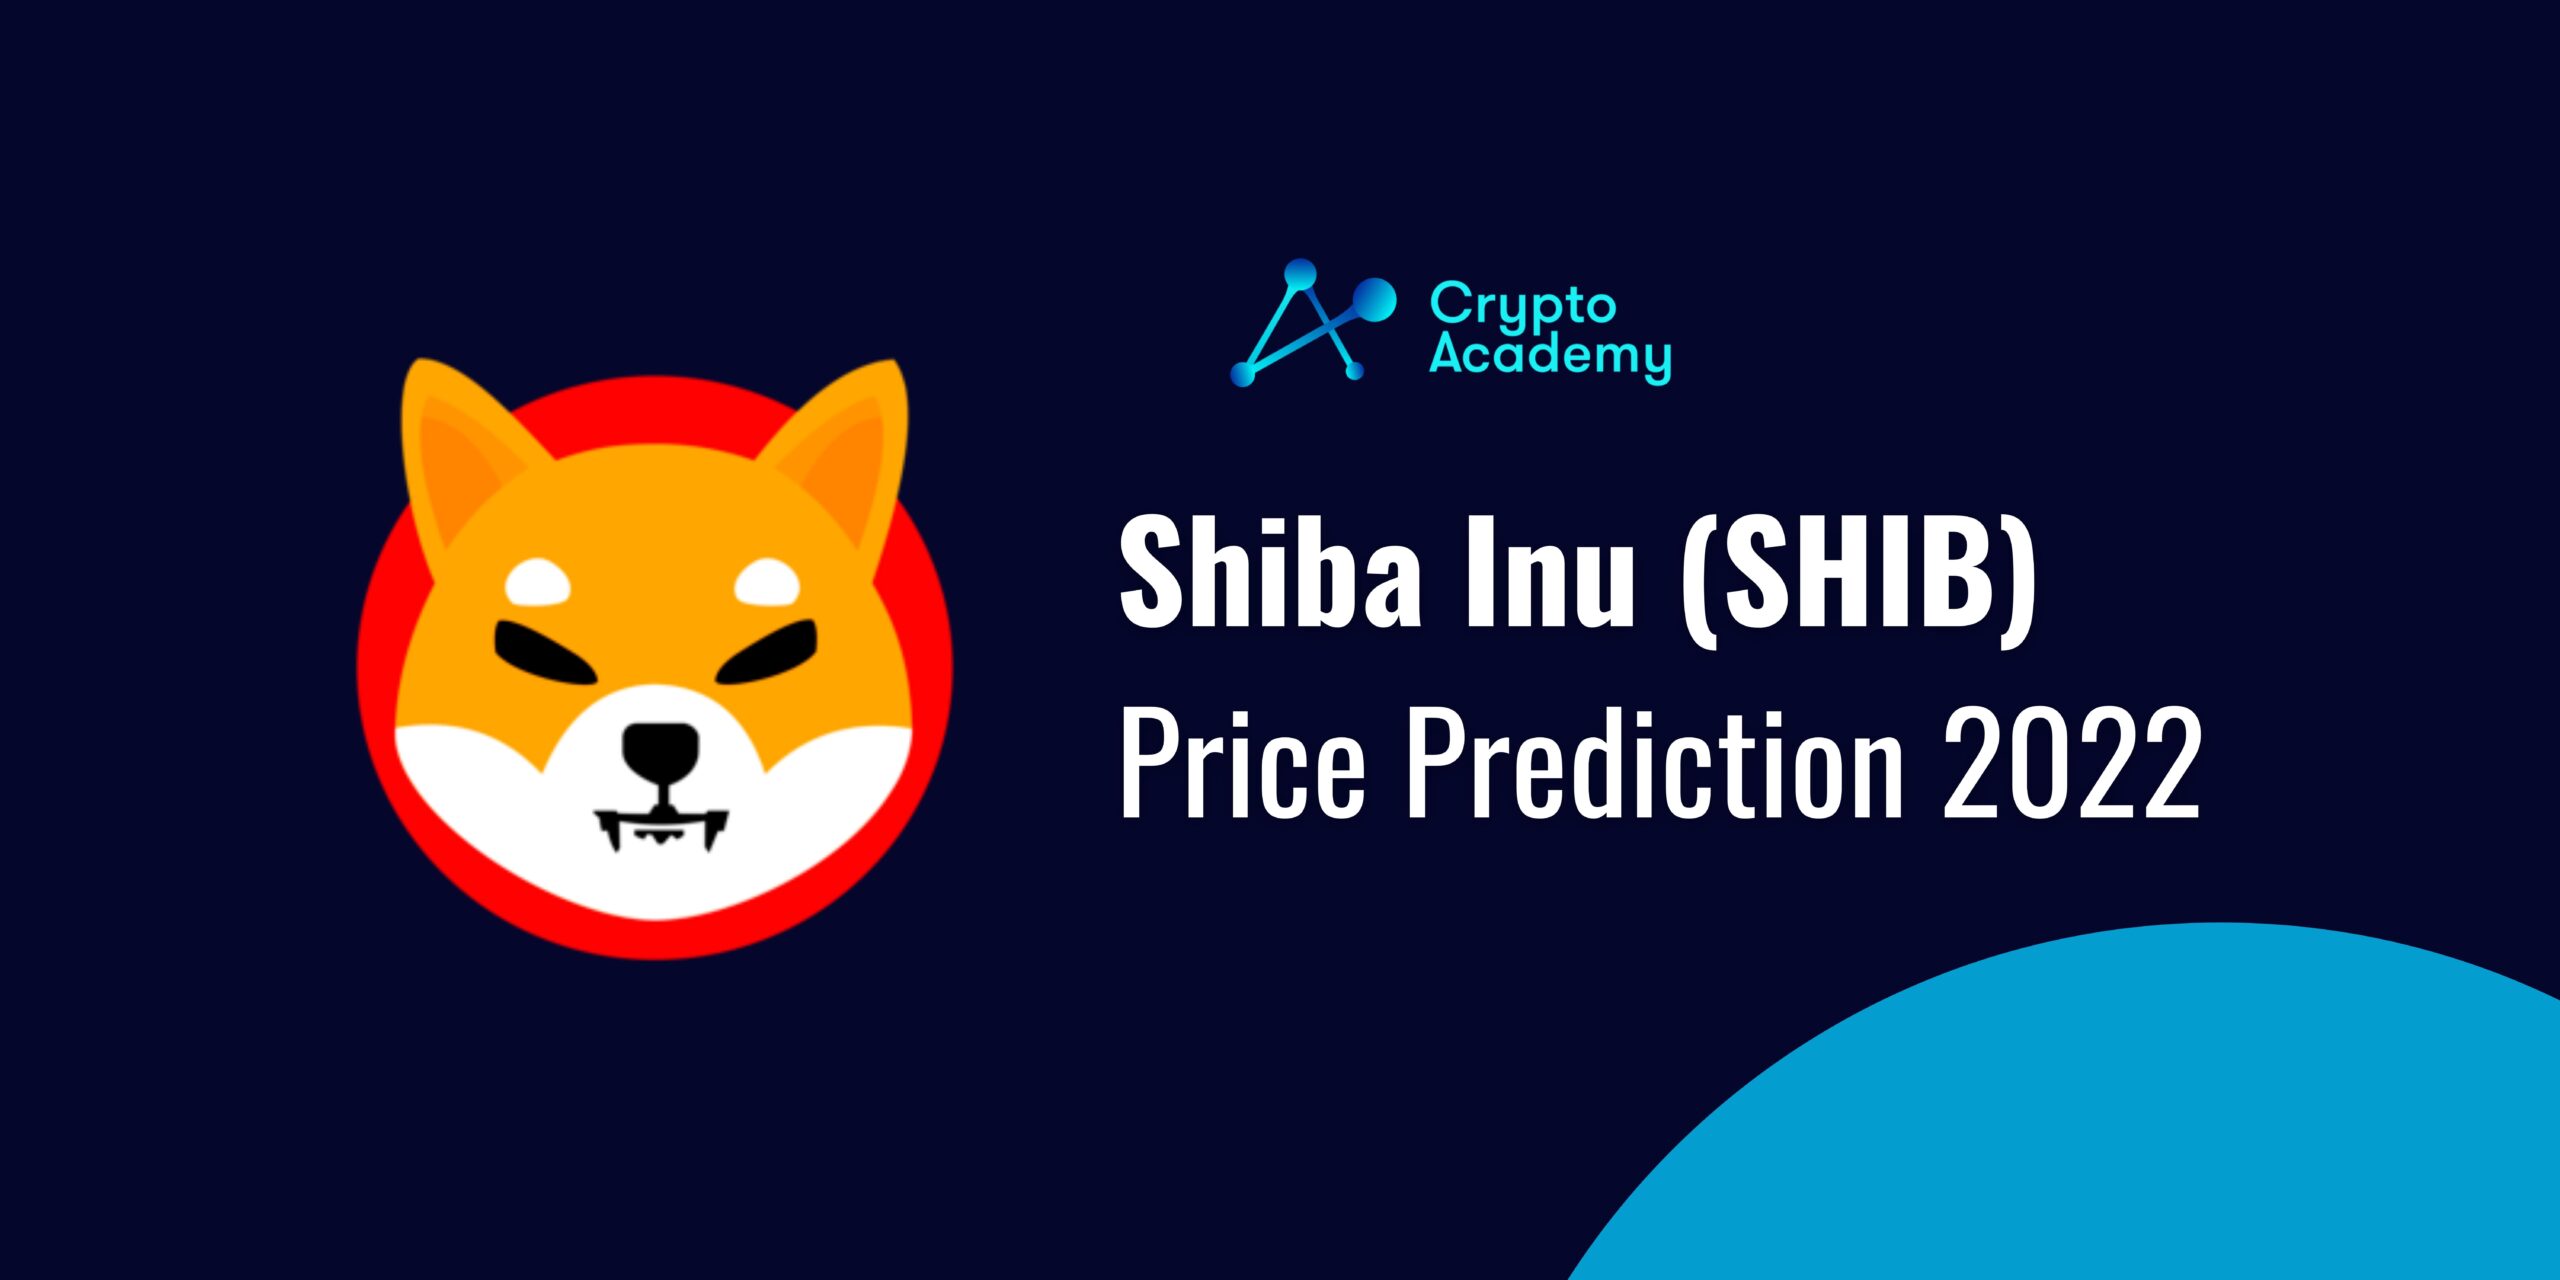 Shiba Inu (SHIB) Price Prediction 2022 and Beyond - Can SHIB Hit $1?